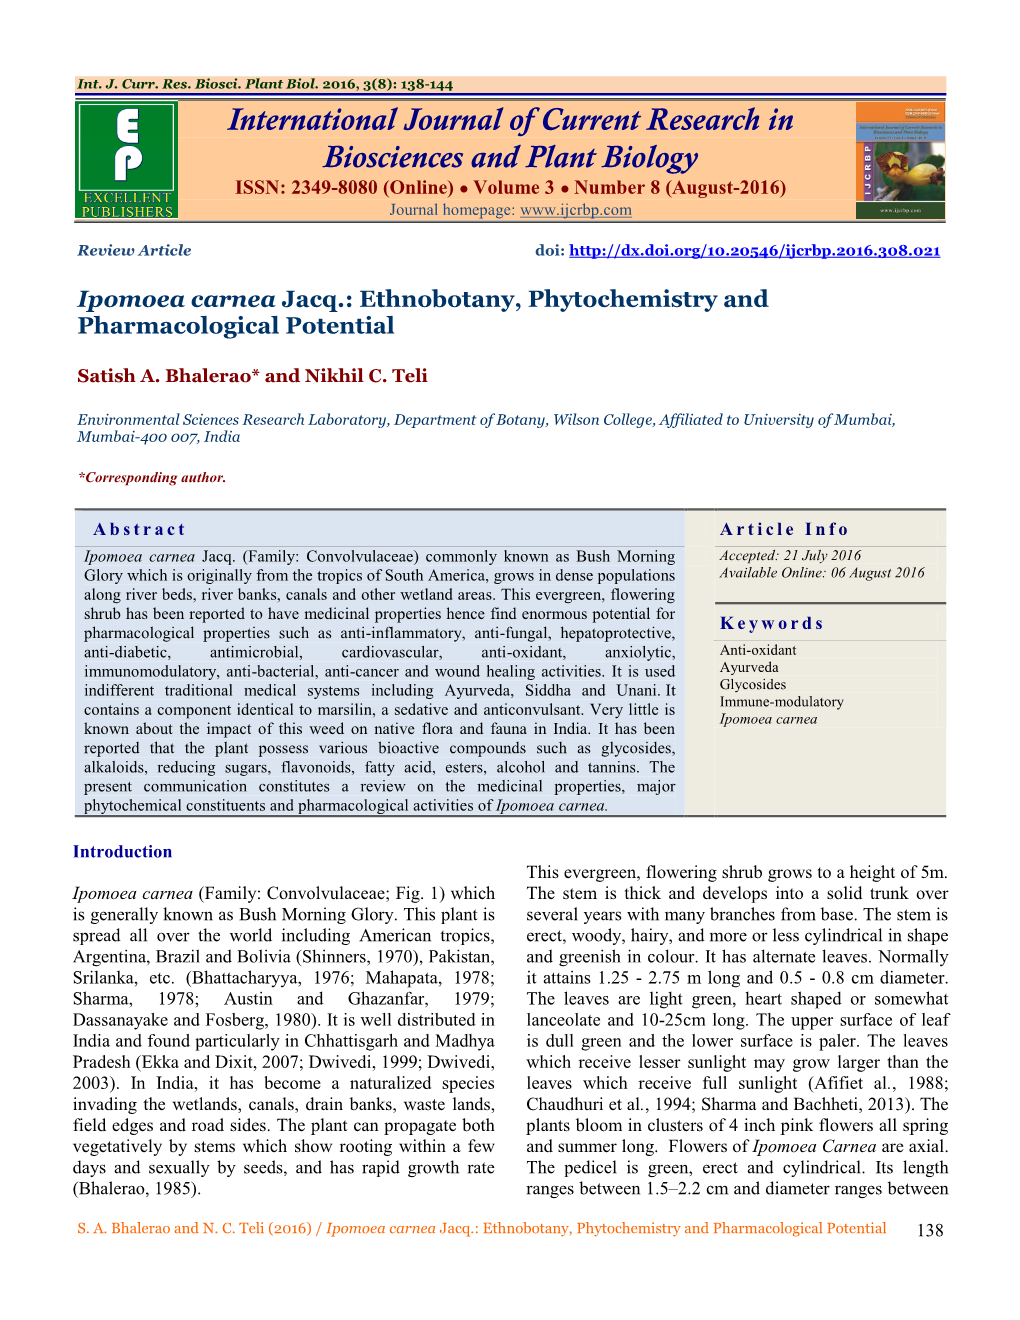 Ipomoea Carnea Jacq.: Ethnobotany, Phytochemistry and Pharmacological Potential